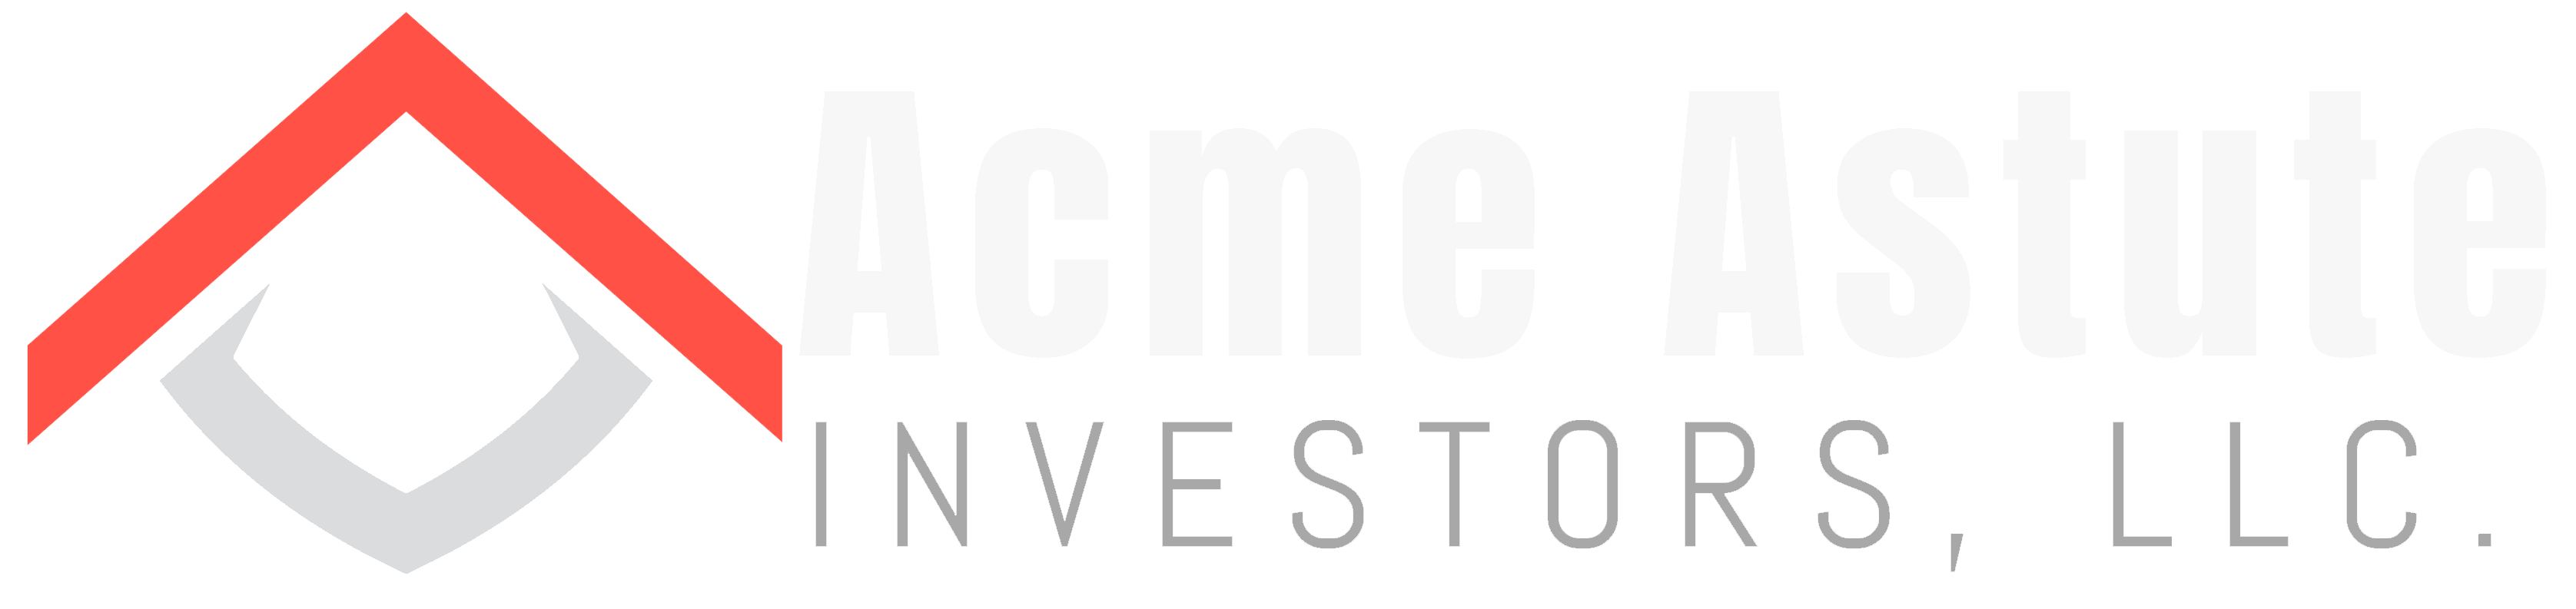 Acme Astute Investors LLCProject Details